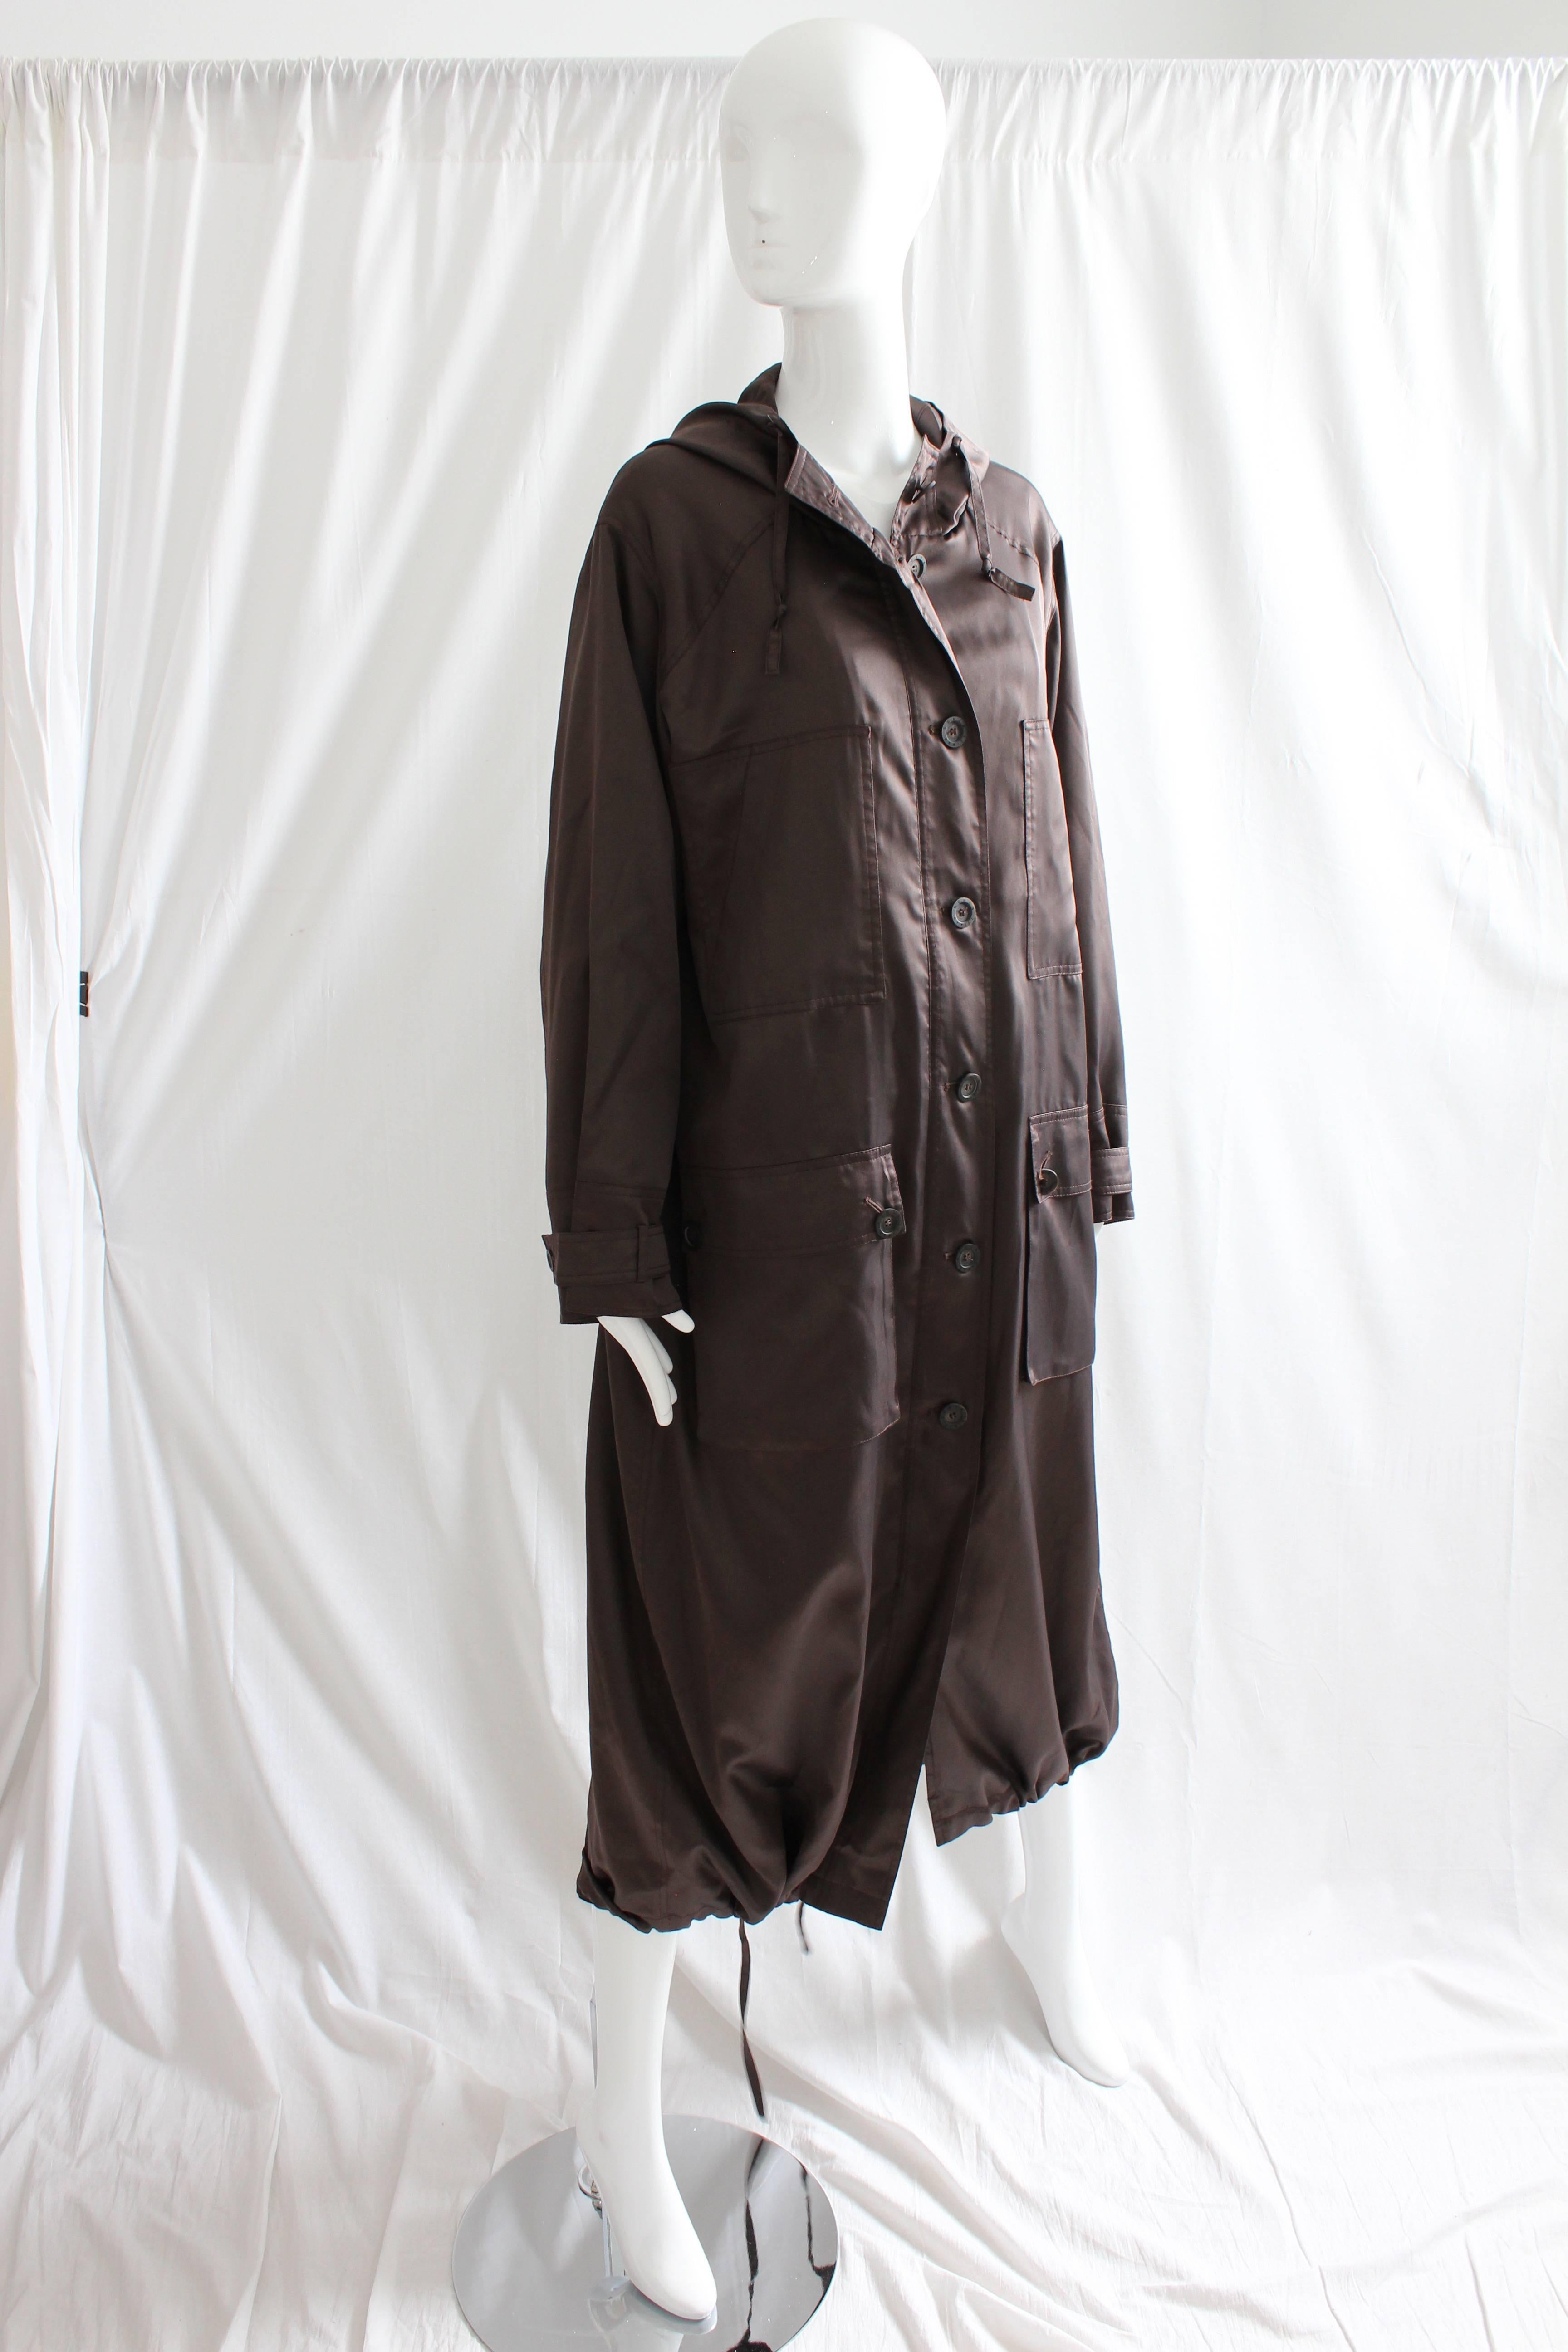 Sonia Rykiel Brown Satin Trench Coat with Hood, 1990s  1